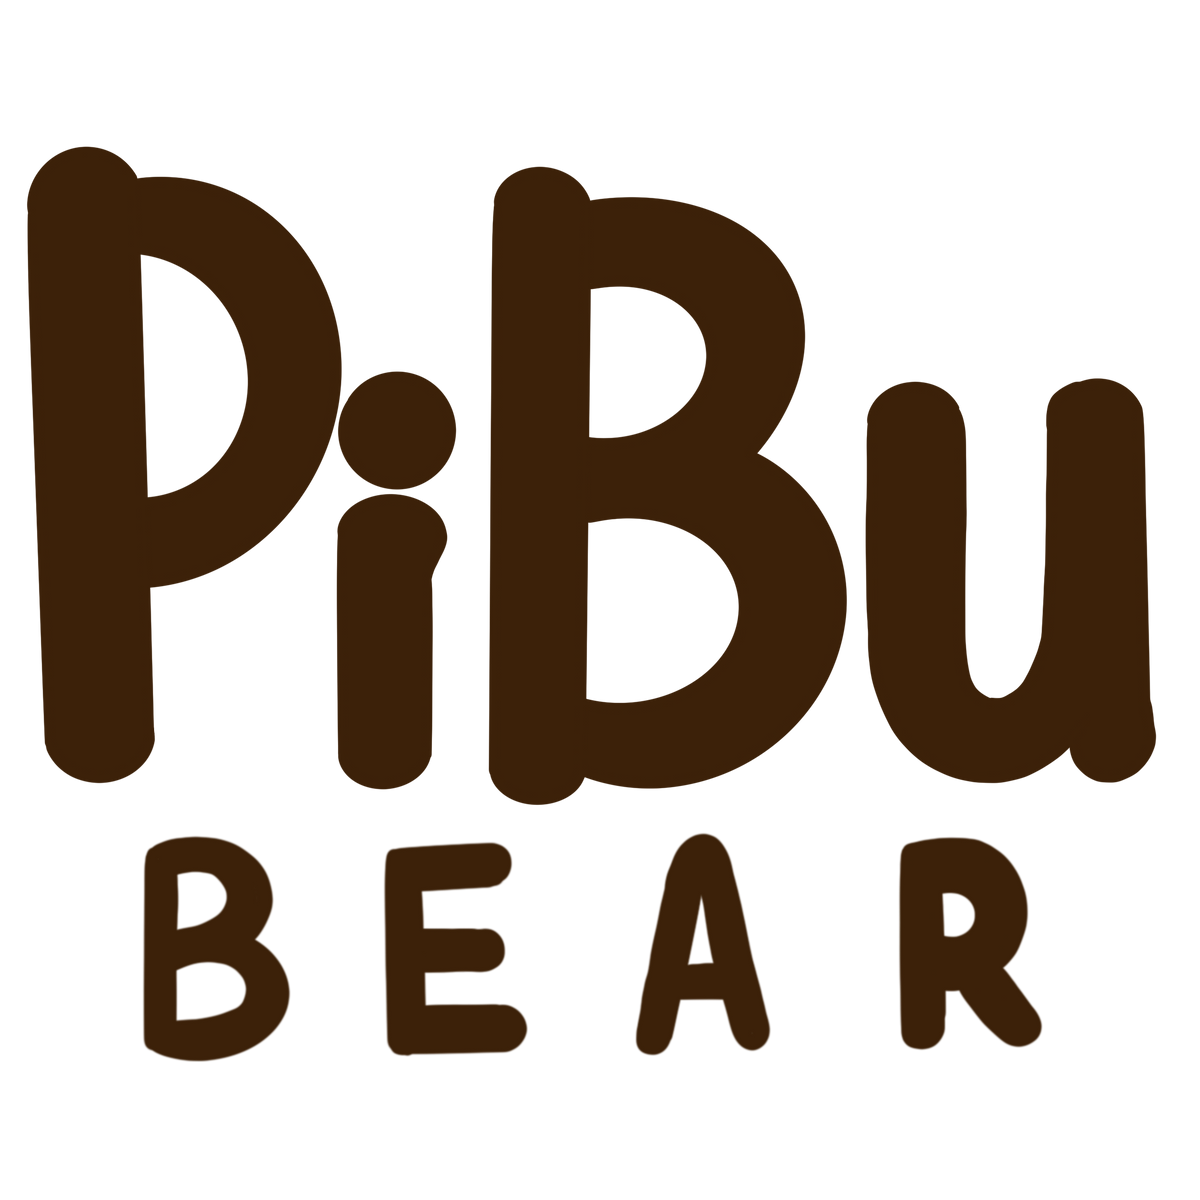 Phone grips – Pibubear